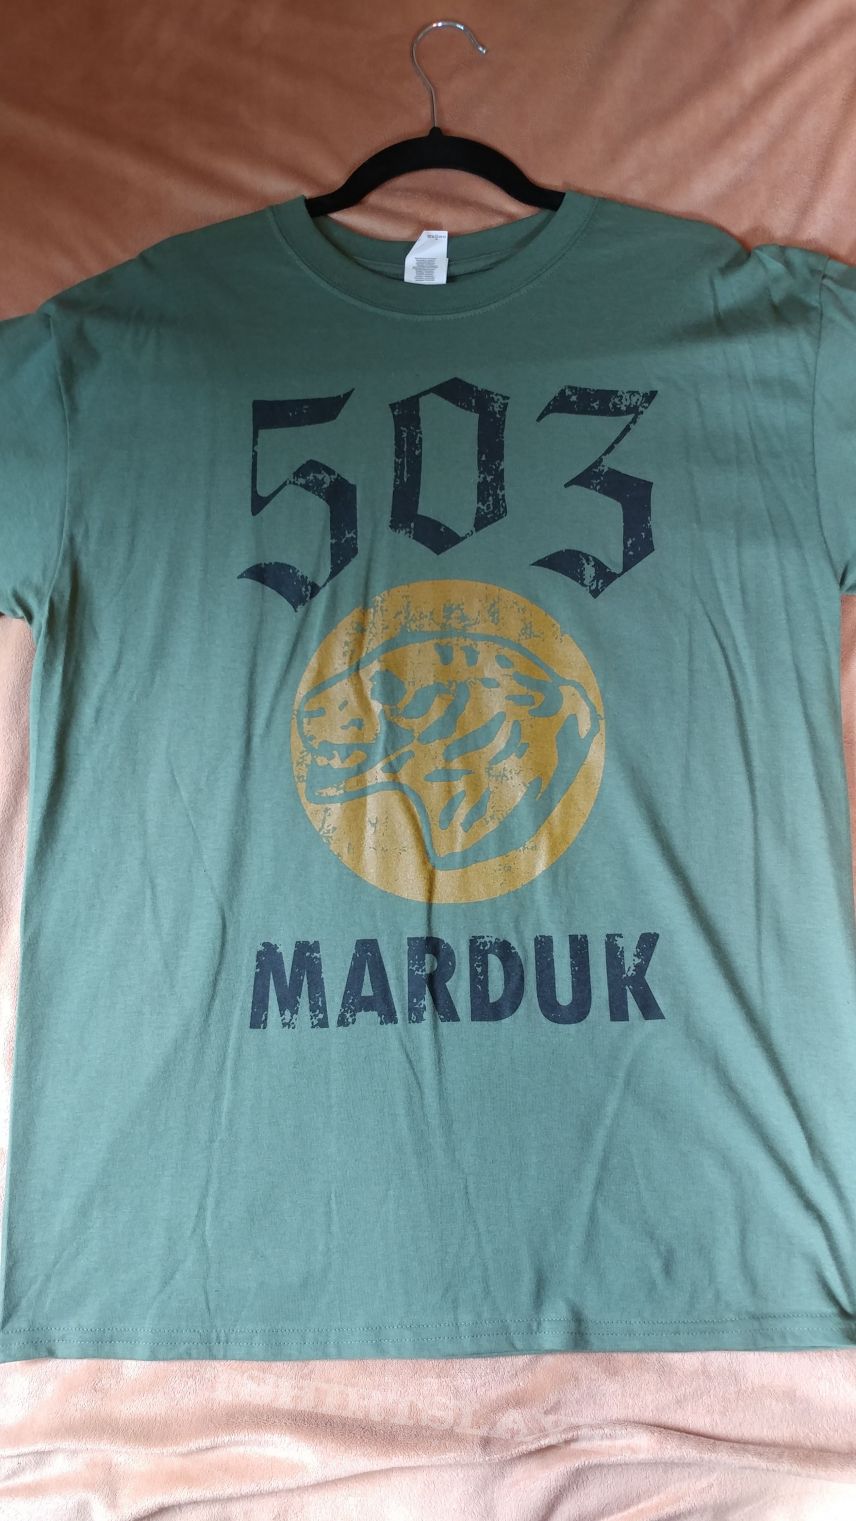 Marduk 503 shirt